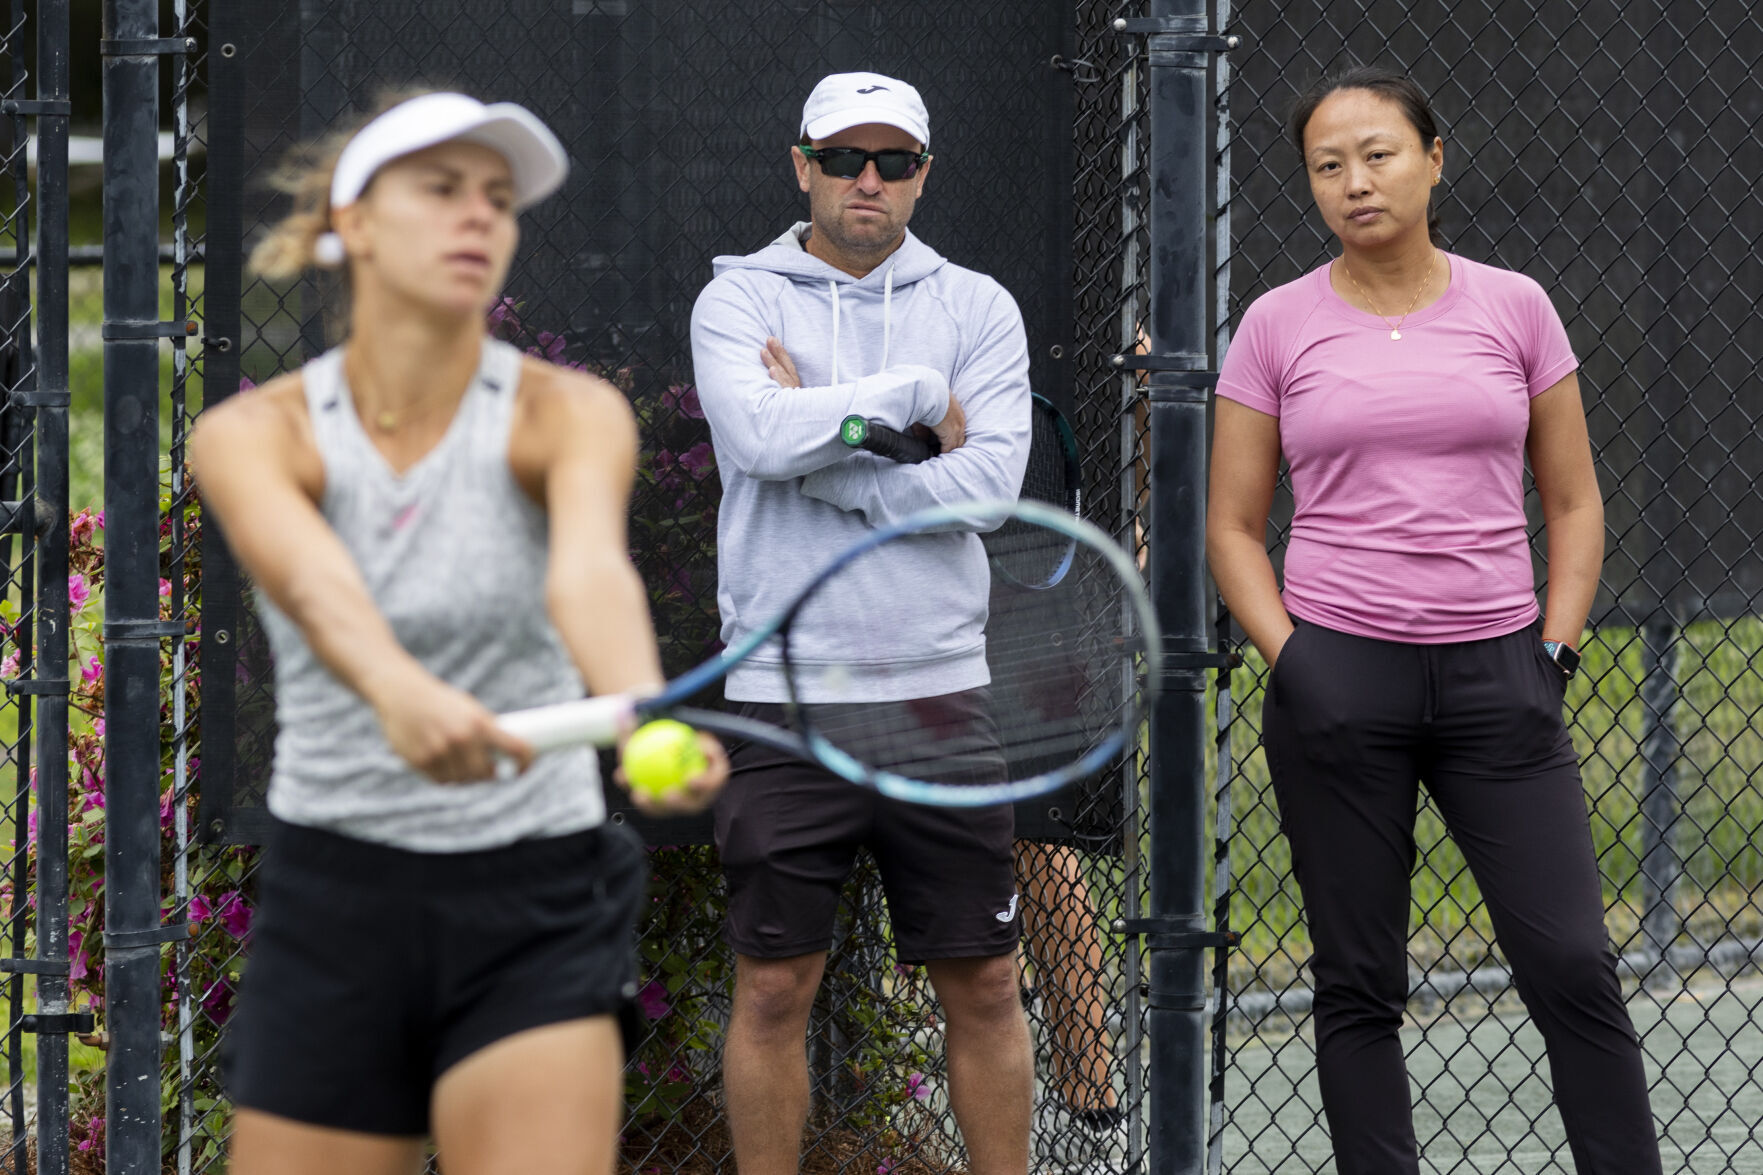 Womens tennis tour program provides education, exposure for female coaches